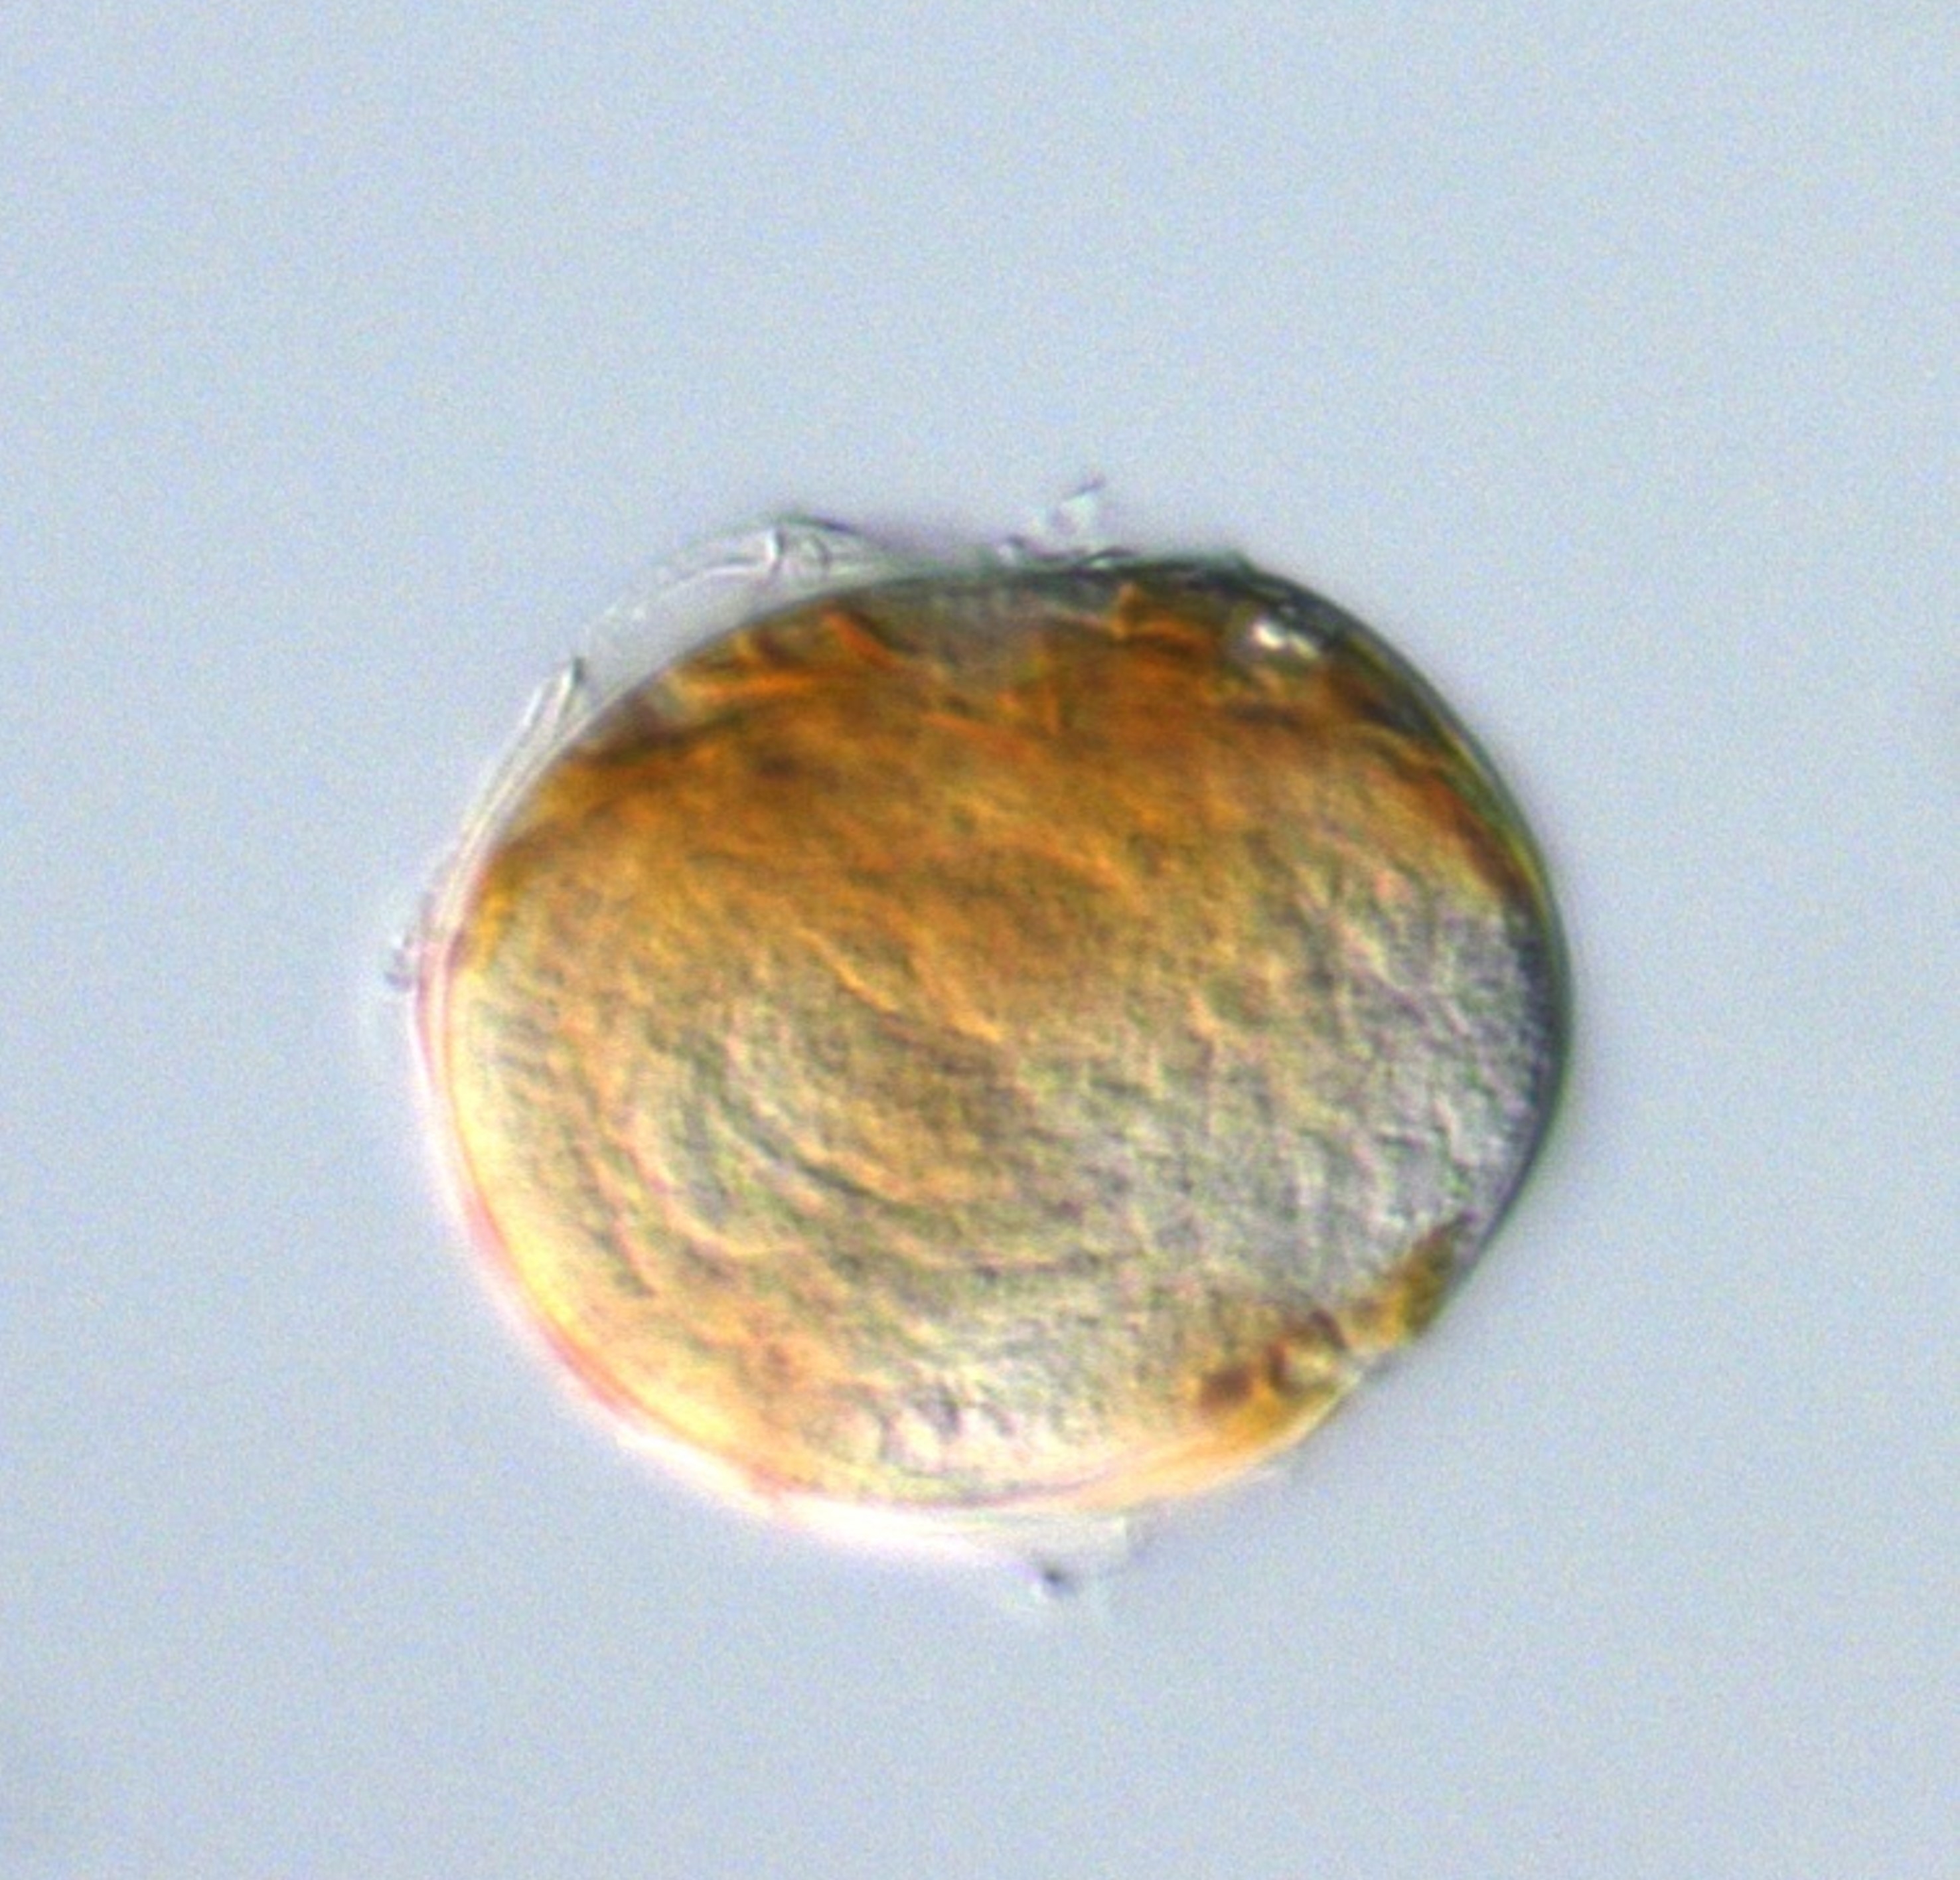 Dinoflagellate Alexandrium (c) Dinoflagellat Alexandrium, der vom Parasiten Amoebophrya befallen ist, unter dem Mikroskop, (c) Yameng Lu